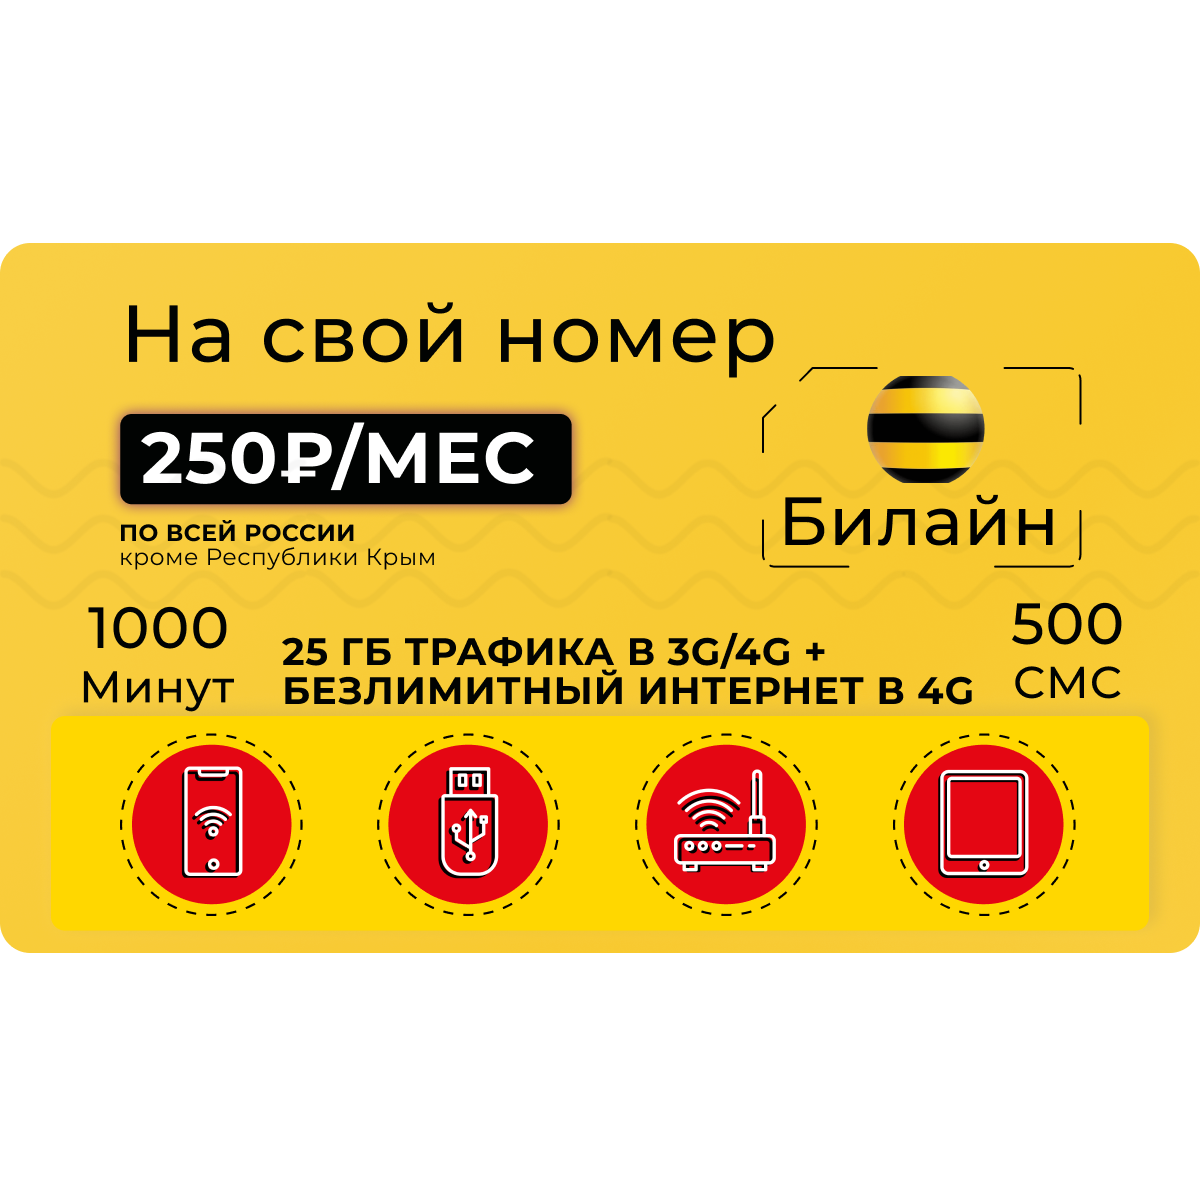 Тариф Билайн 1000 минут и 25 ГБ + безлимит в 4G за 250 руб/мес - купить тариф по выгодной цене | Безлимитик.ру